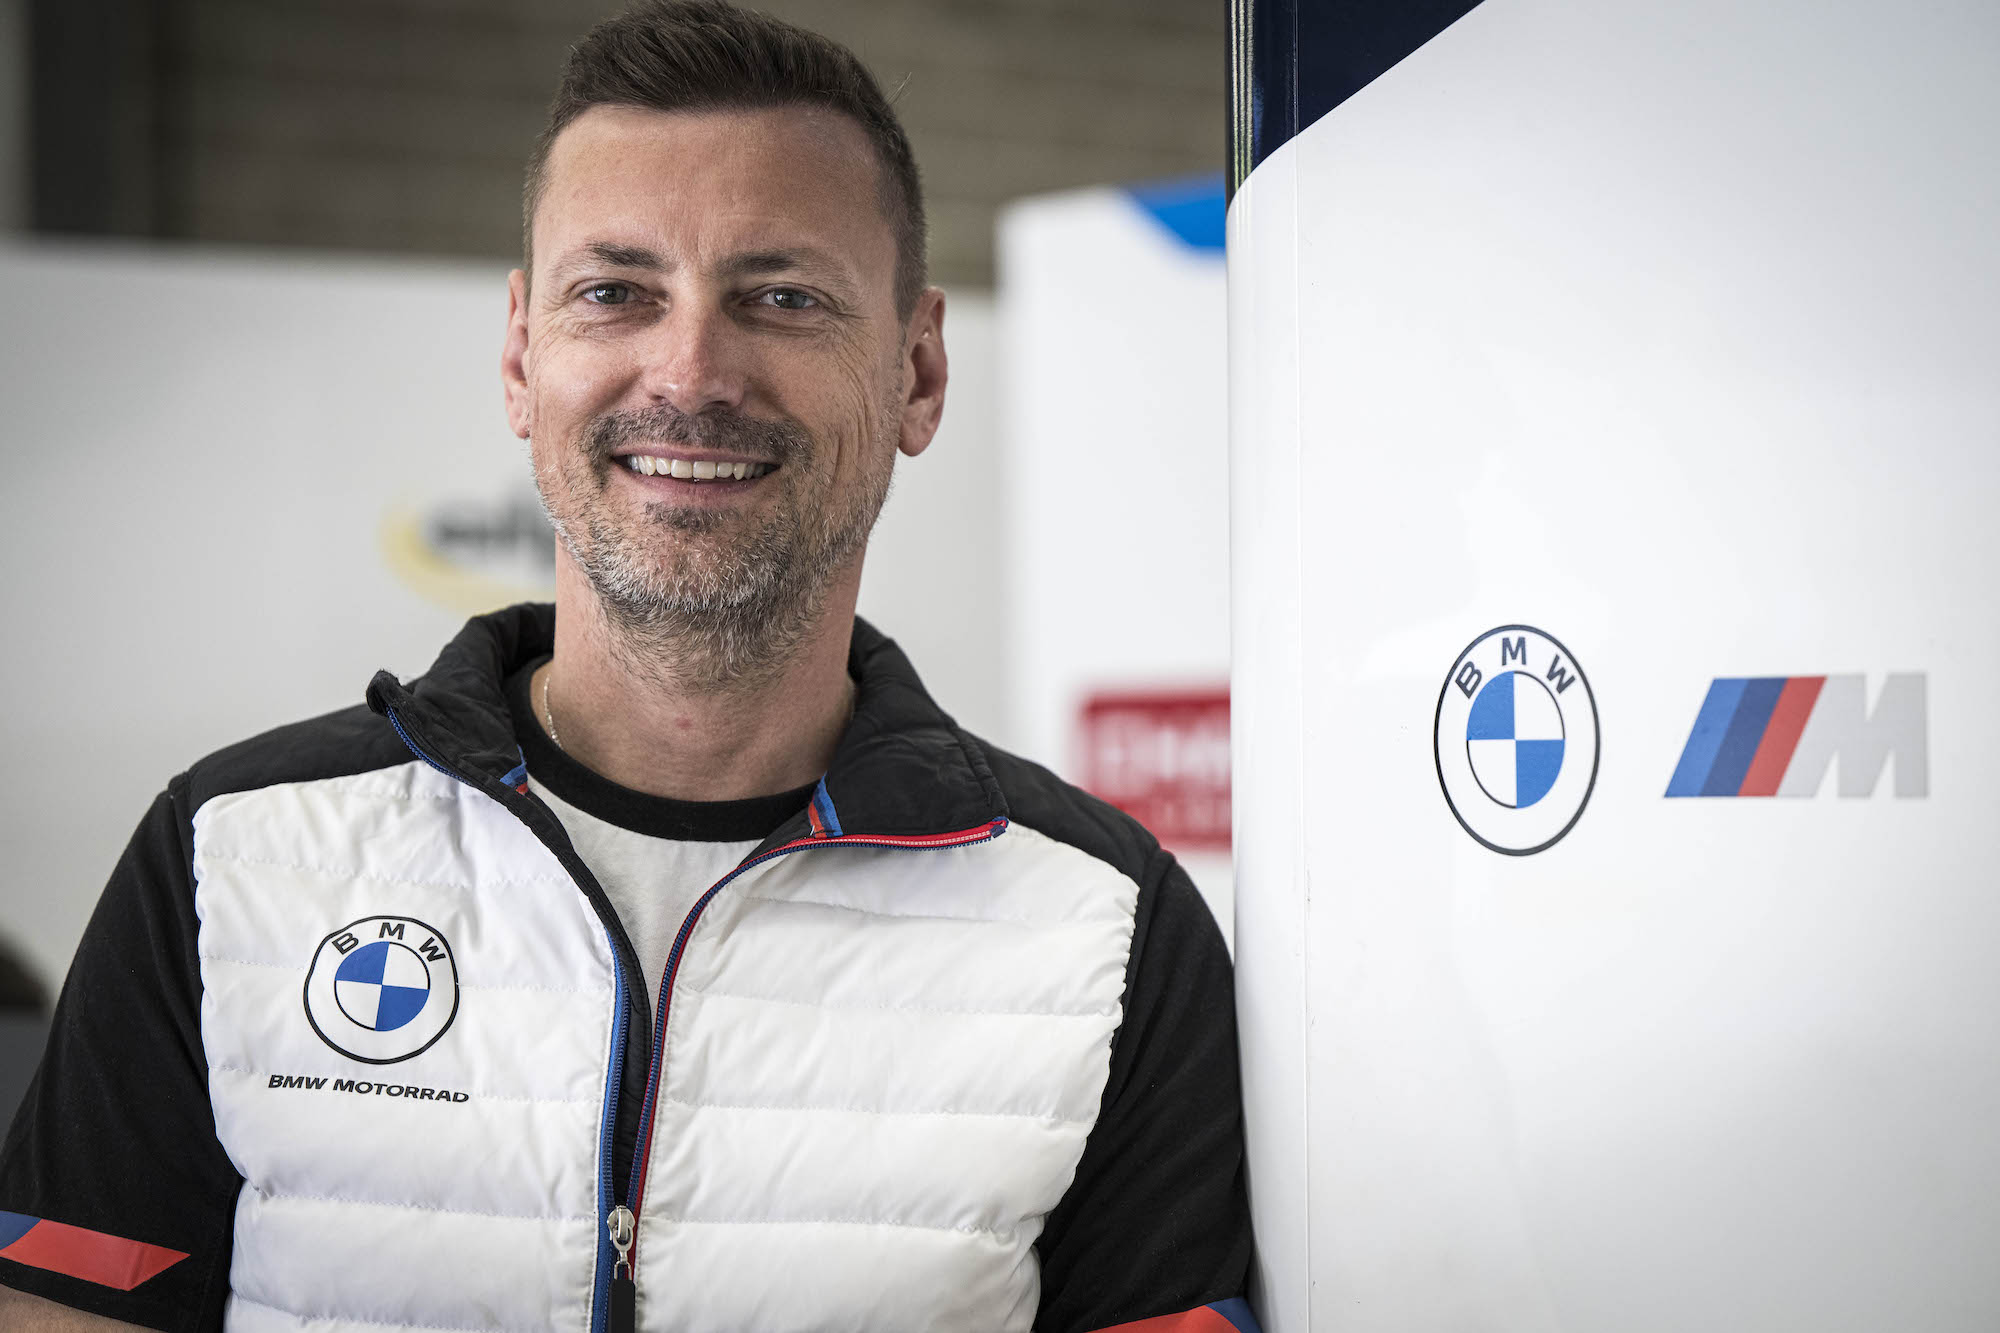 Uwe Geyer. Head of BMW Motorrad Customer Racing and BMW Motorrad Motorsport Marketing Director.